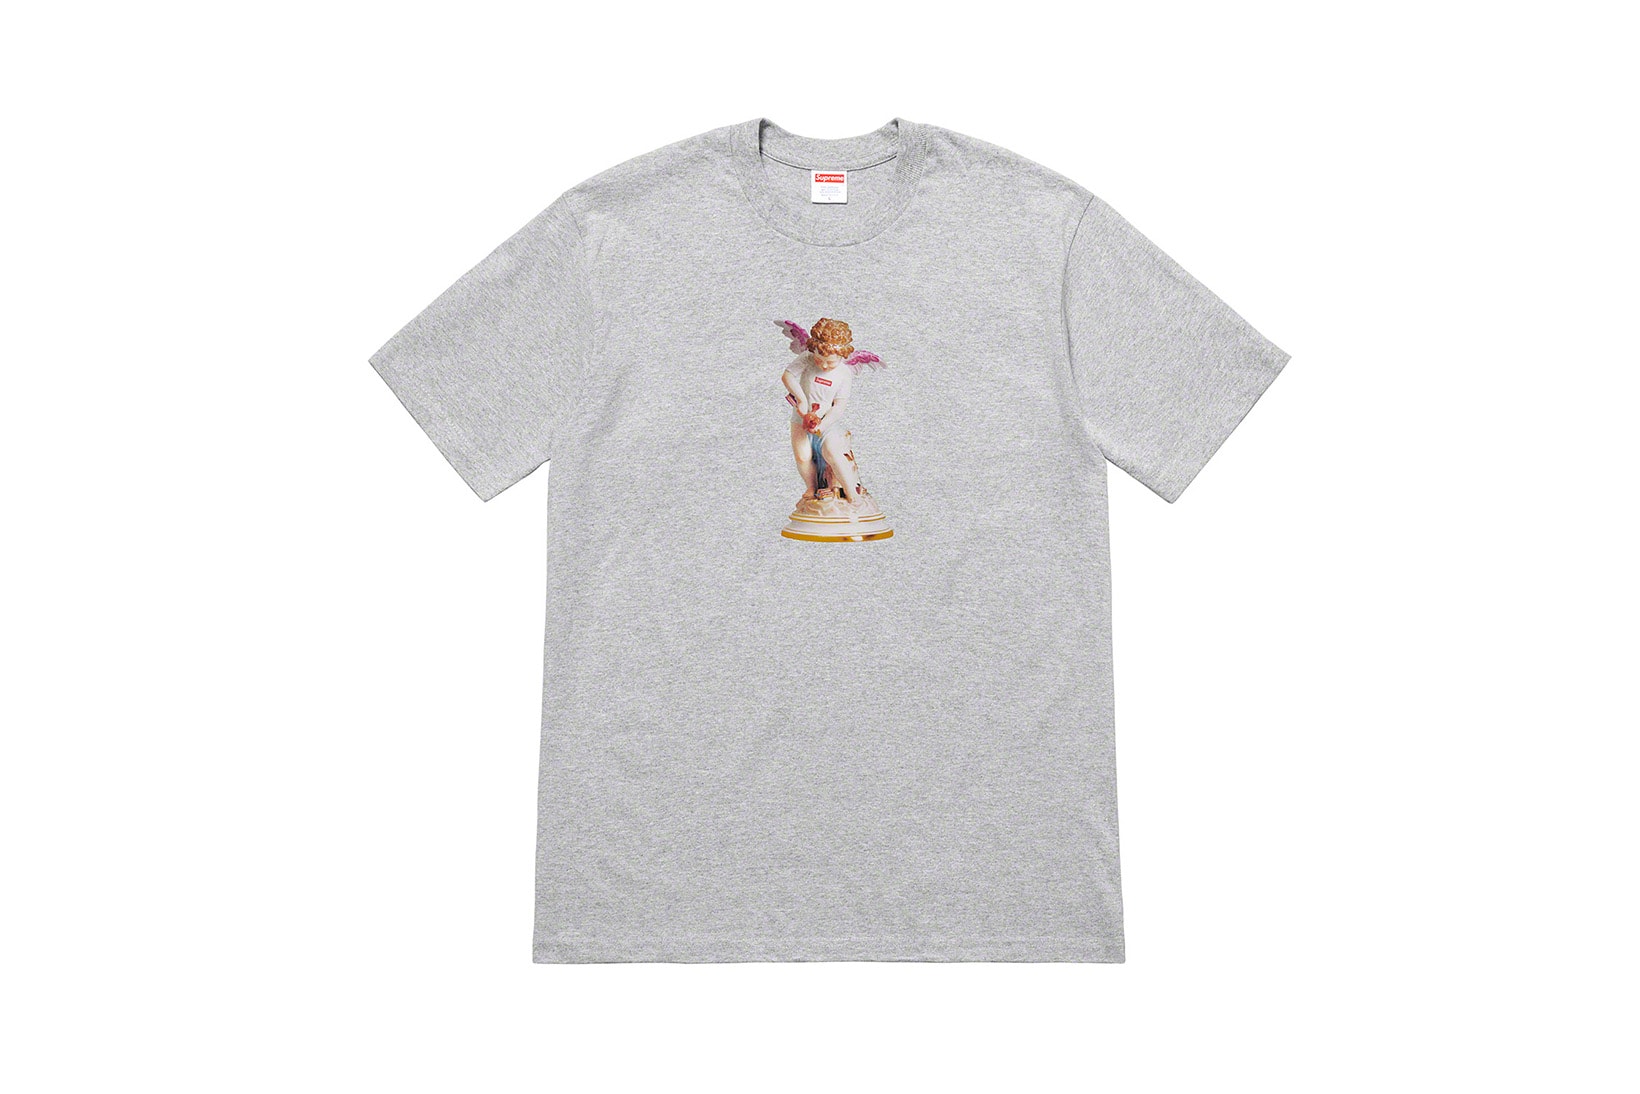 Supreme New York Spring 2019 Graphic Tees T-Shirts Dali Ghost Rider